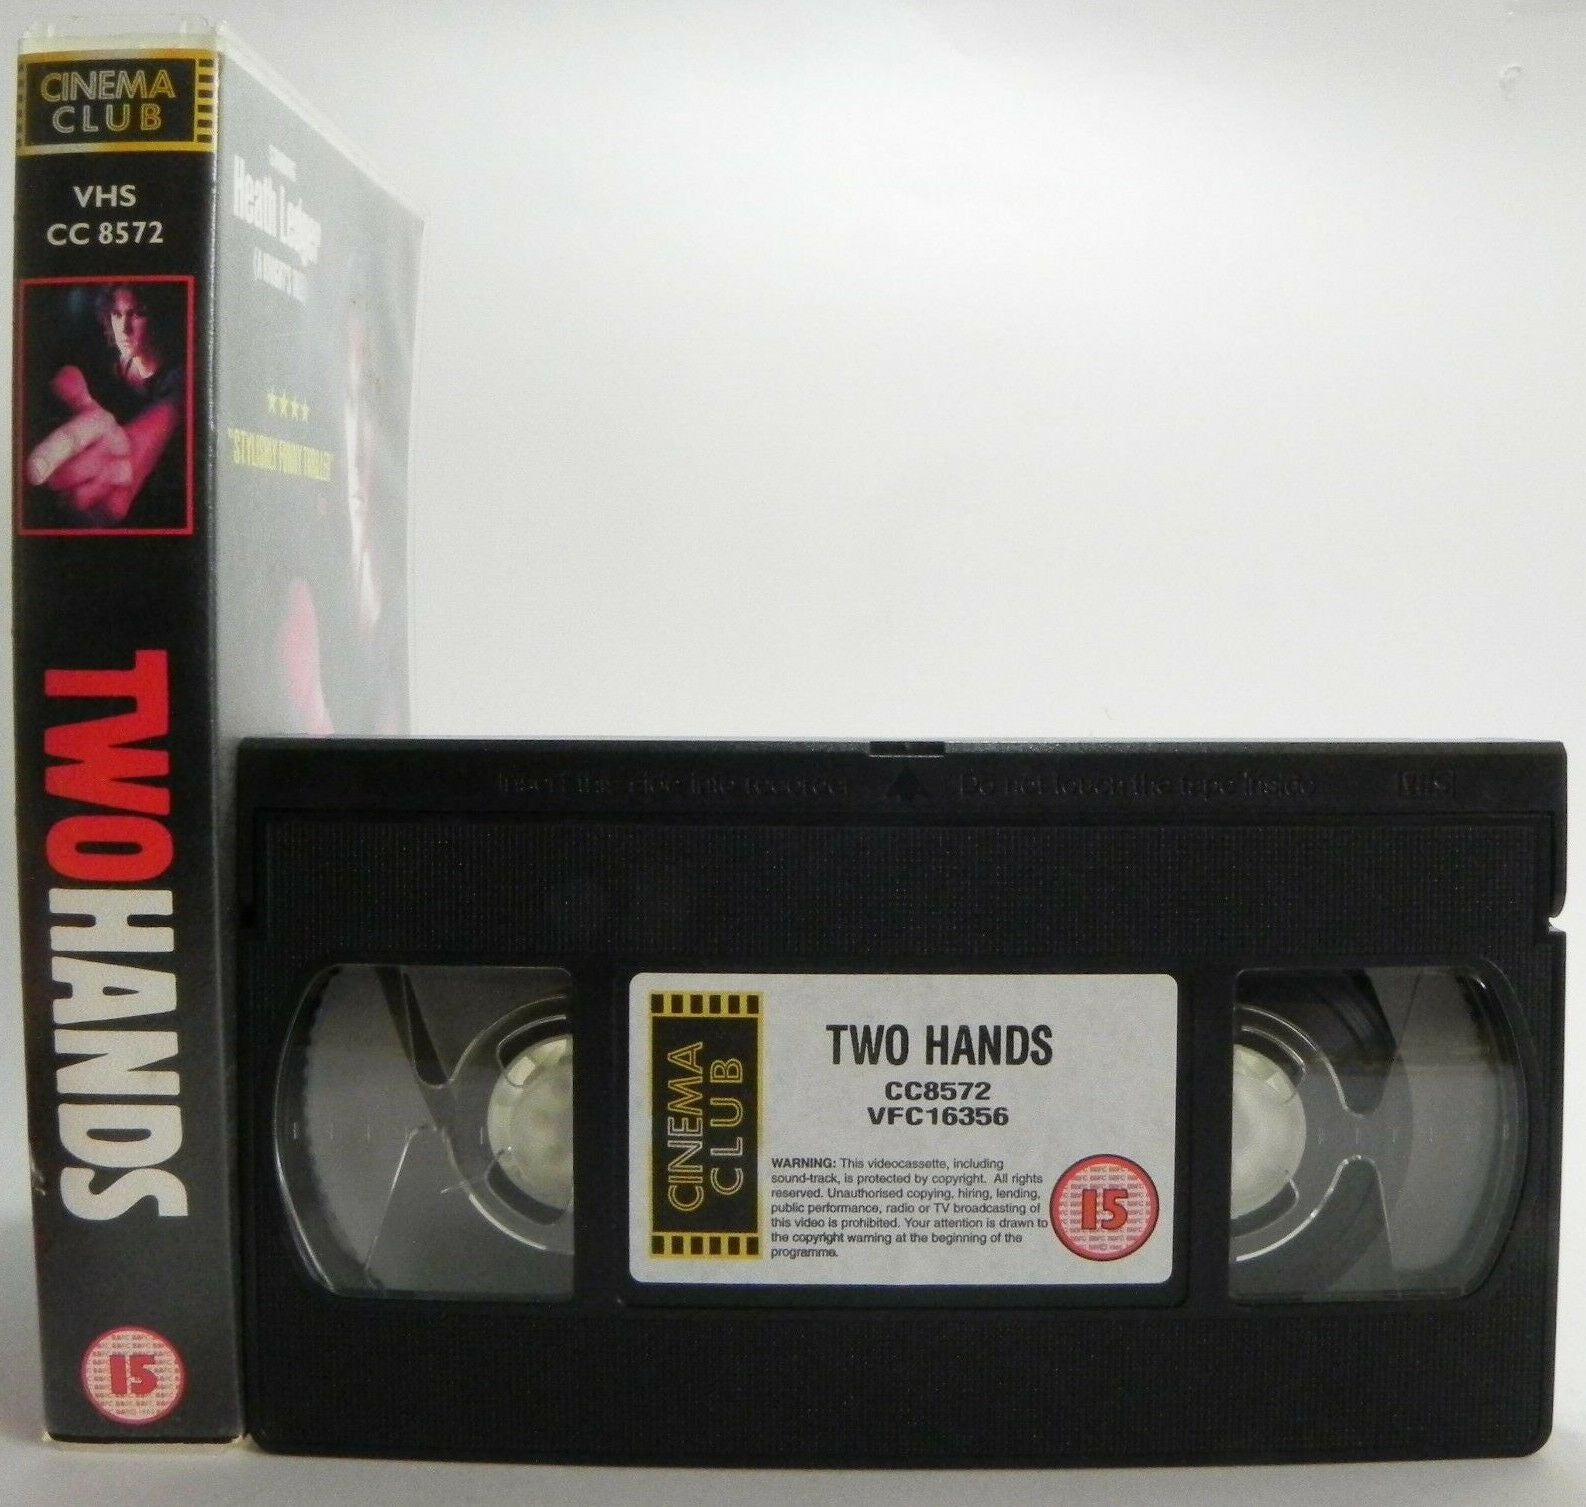 Two Hands: G.Jordan Film - Thriller (1998) - Heath Ledger - Susie Porter - VHS-